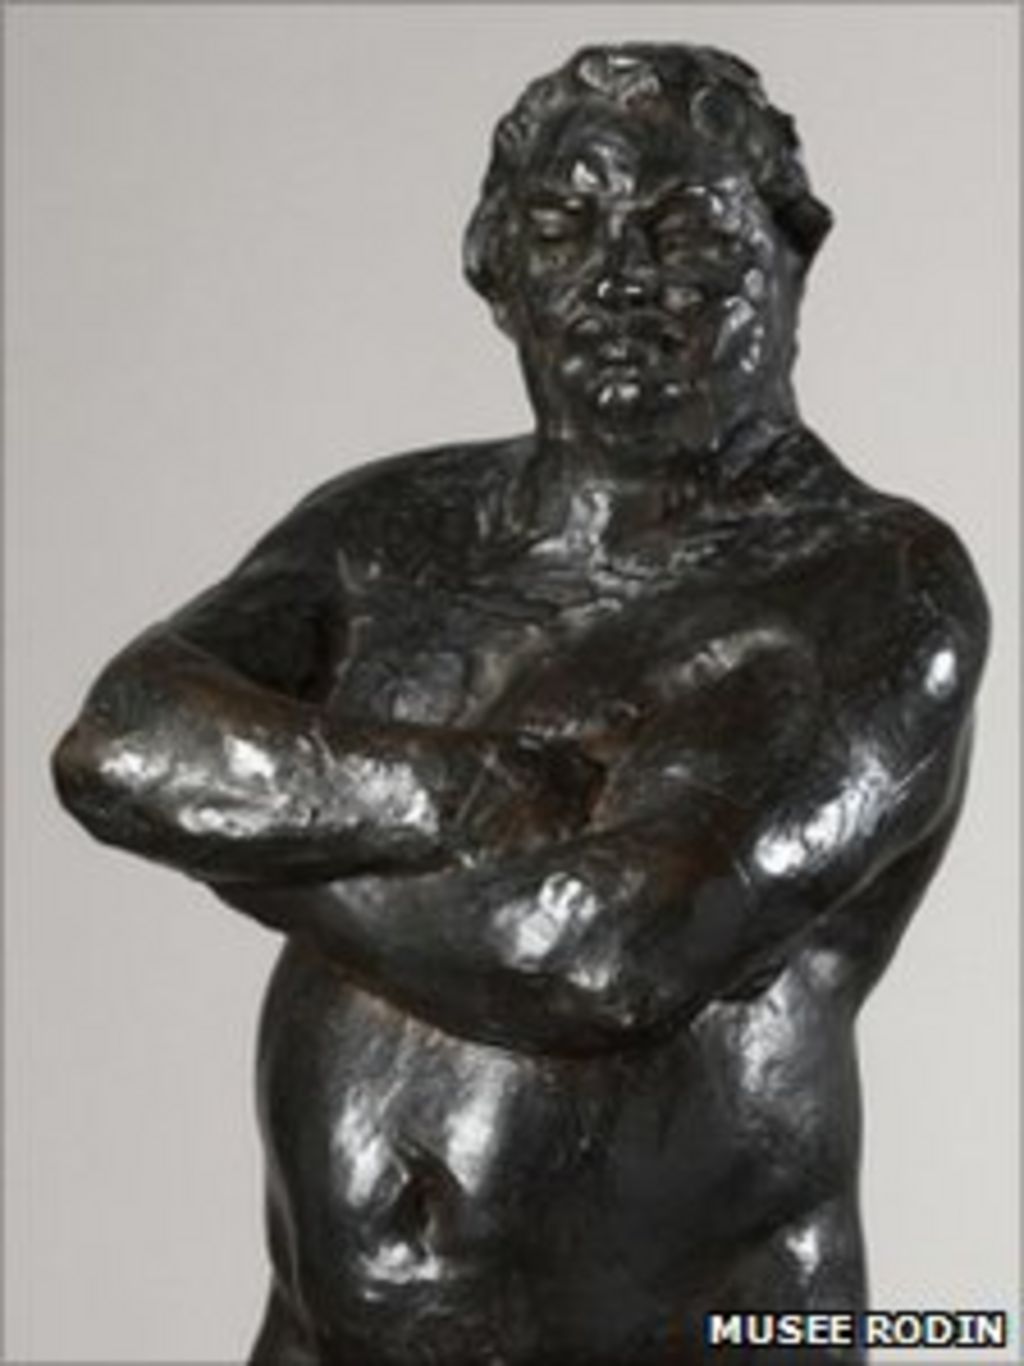 Rodin sculpture stolen from Israel Museum - BBC News